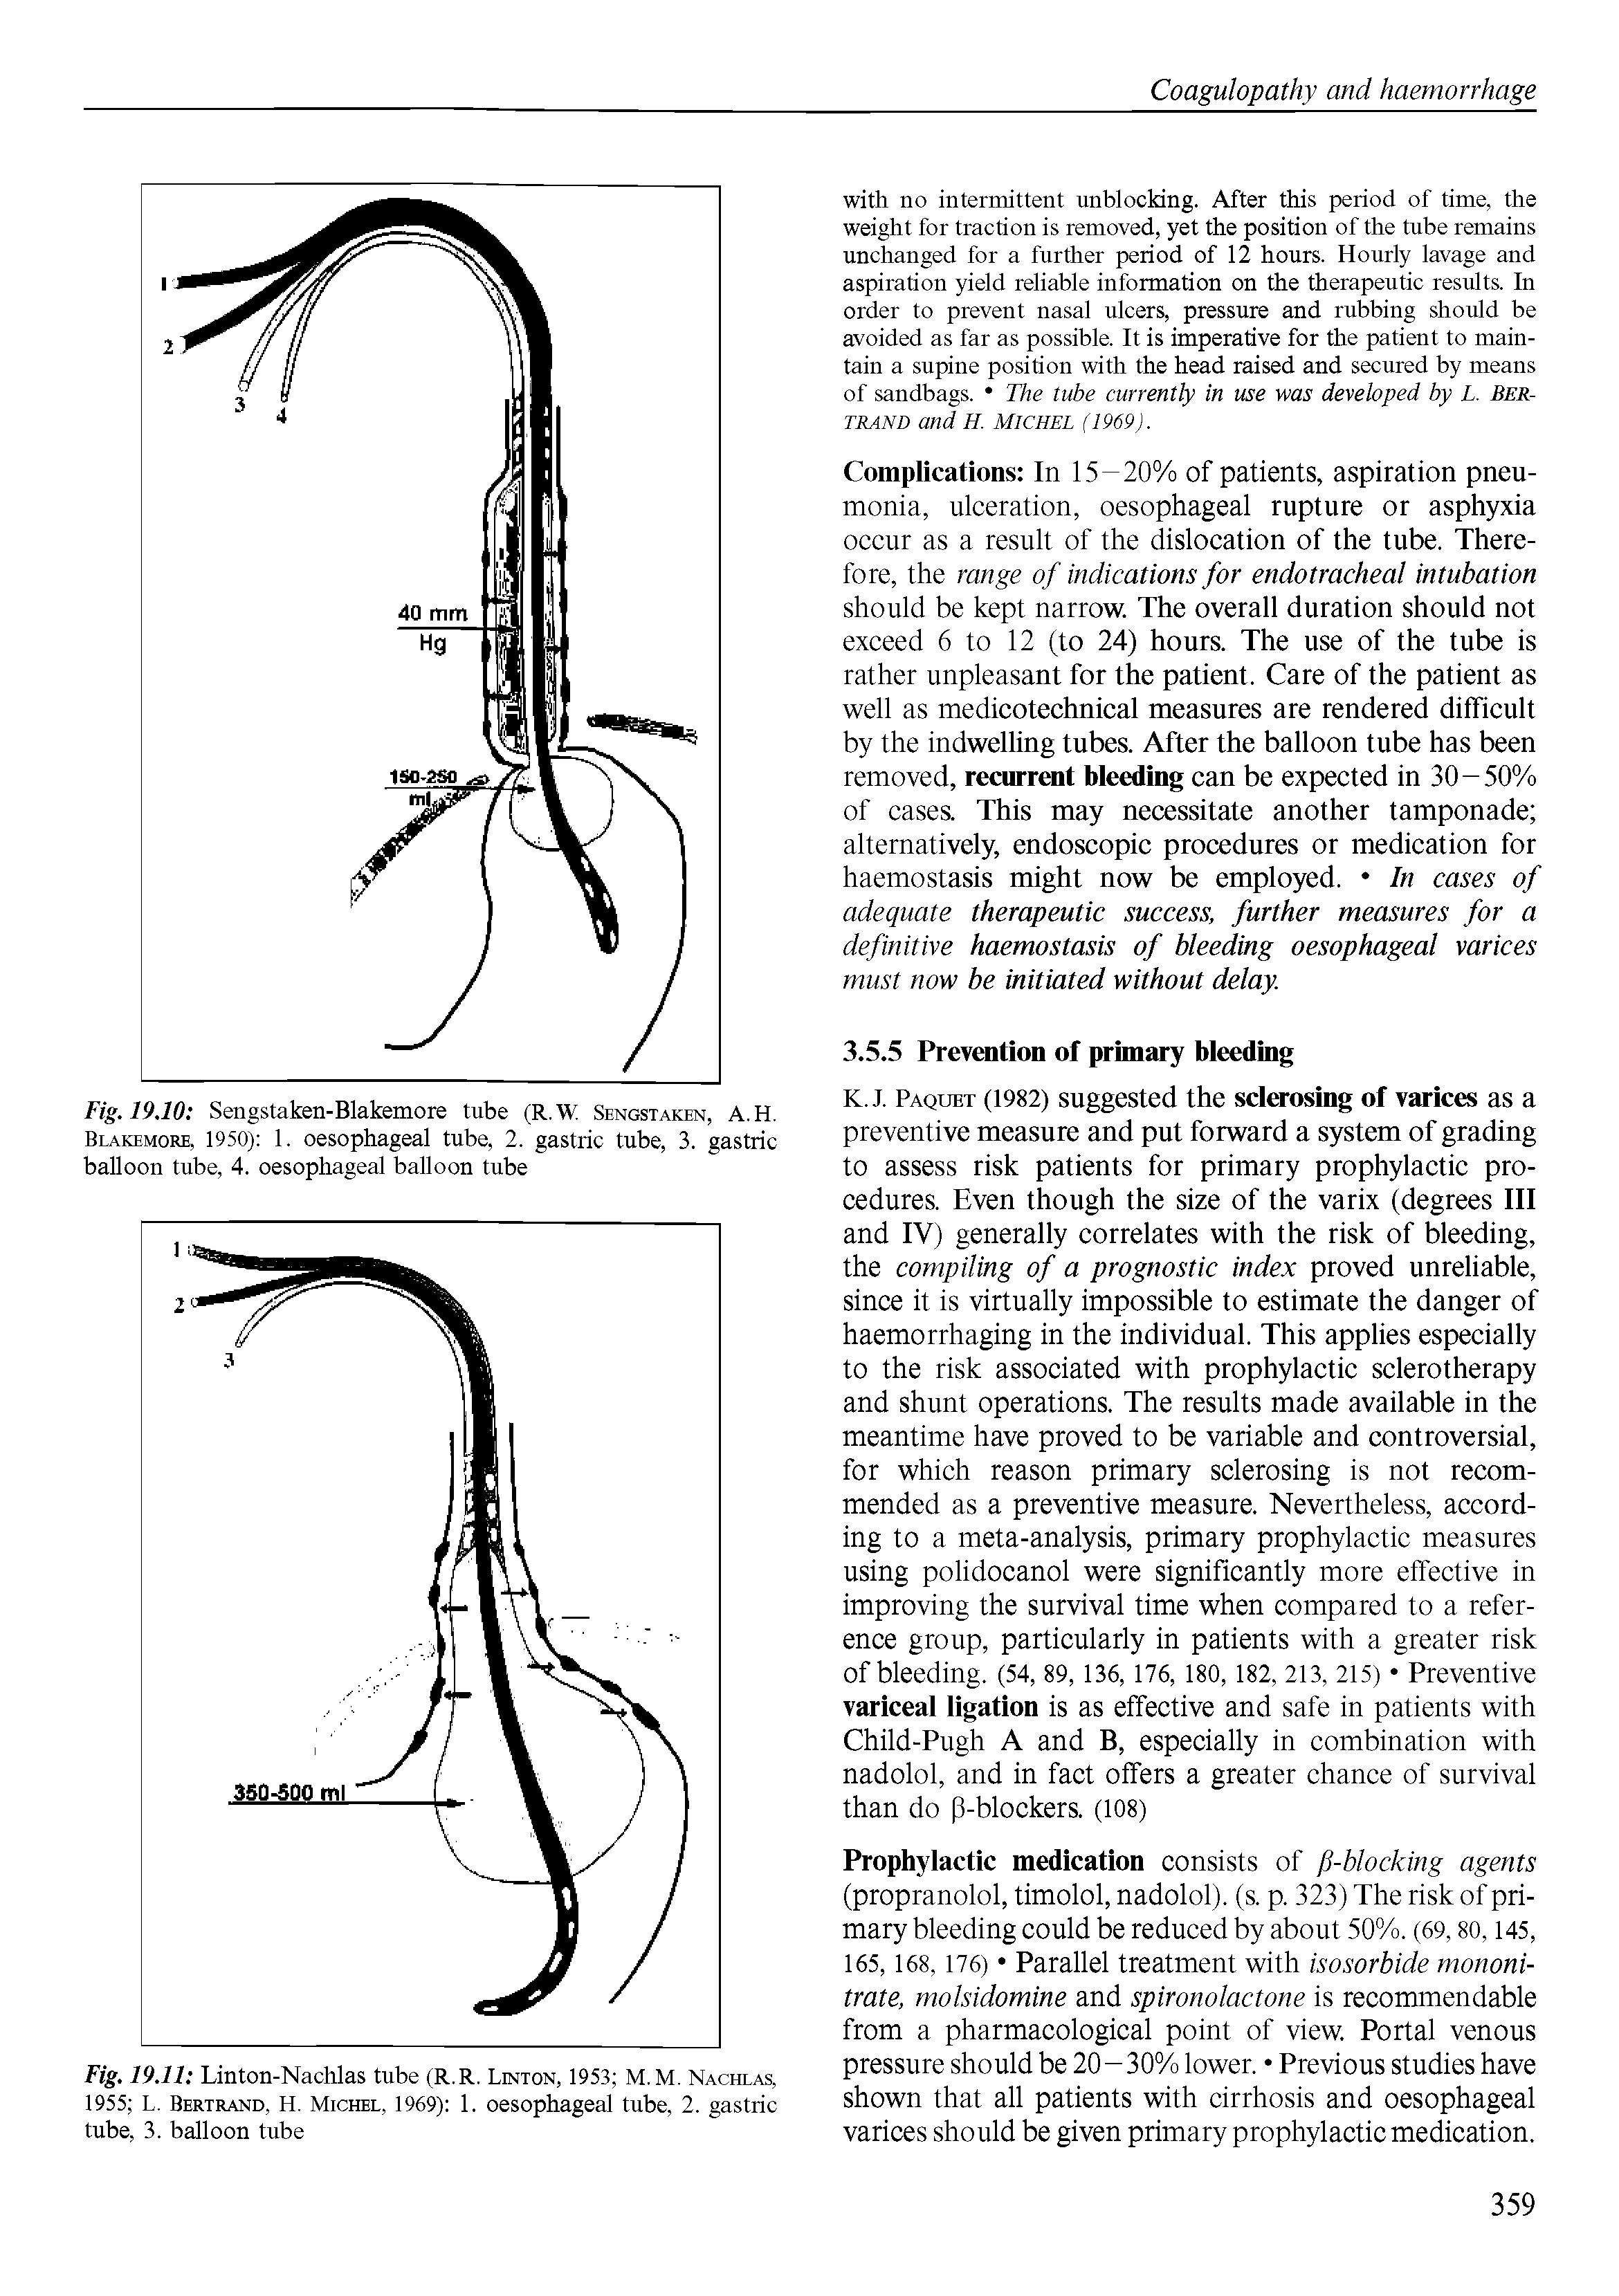 Fig. 19.10 Sengstaken-Blakemore tube (R.W Sengstaken, A.H. Blakemore, 1950) 1. oesophageal tube, 2. gastric tube, 3. gastric balloon tube, 4. oesophageal balloon tube...